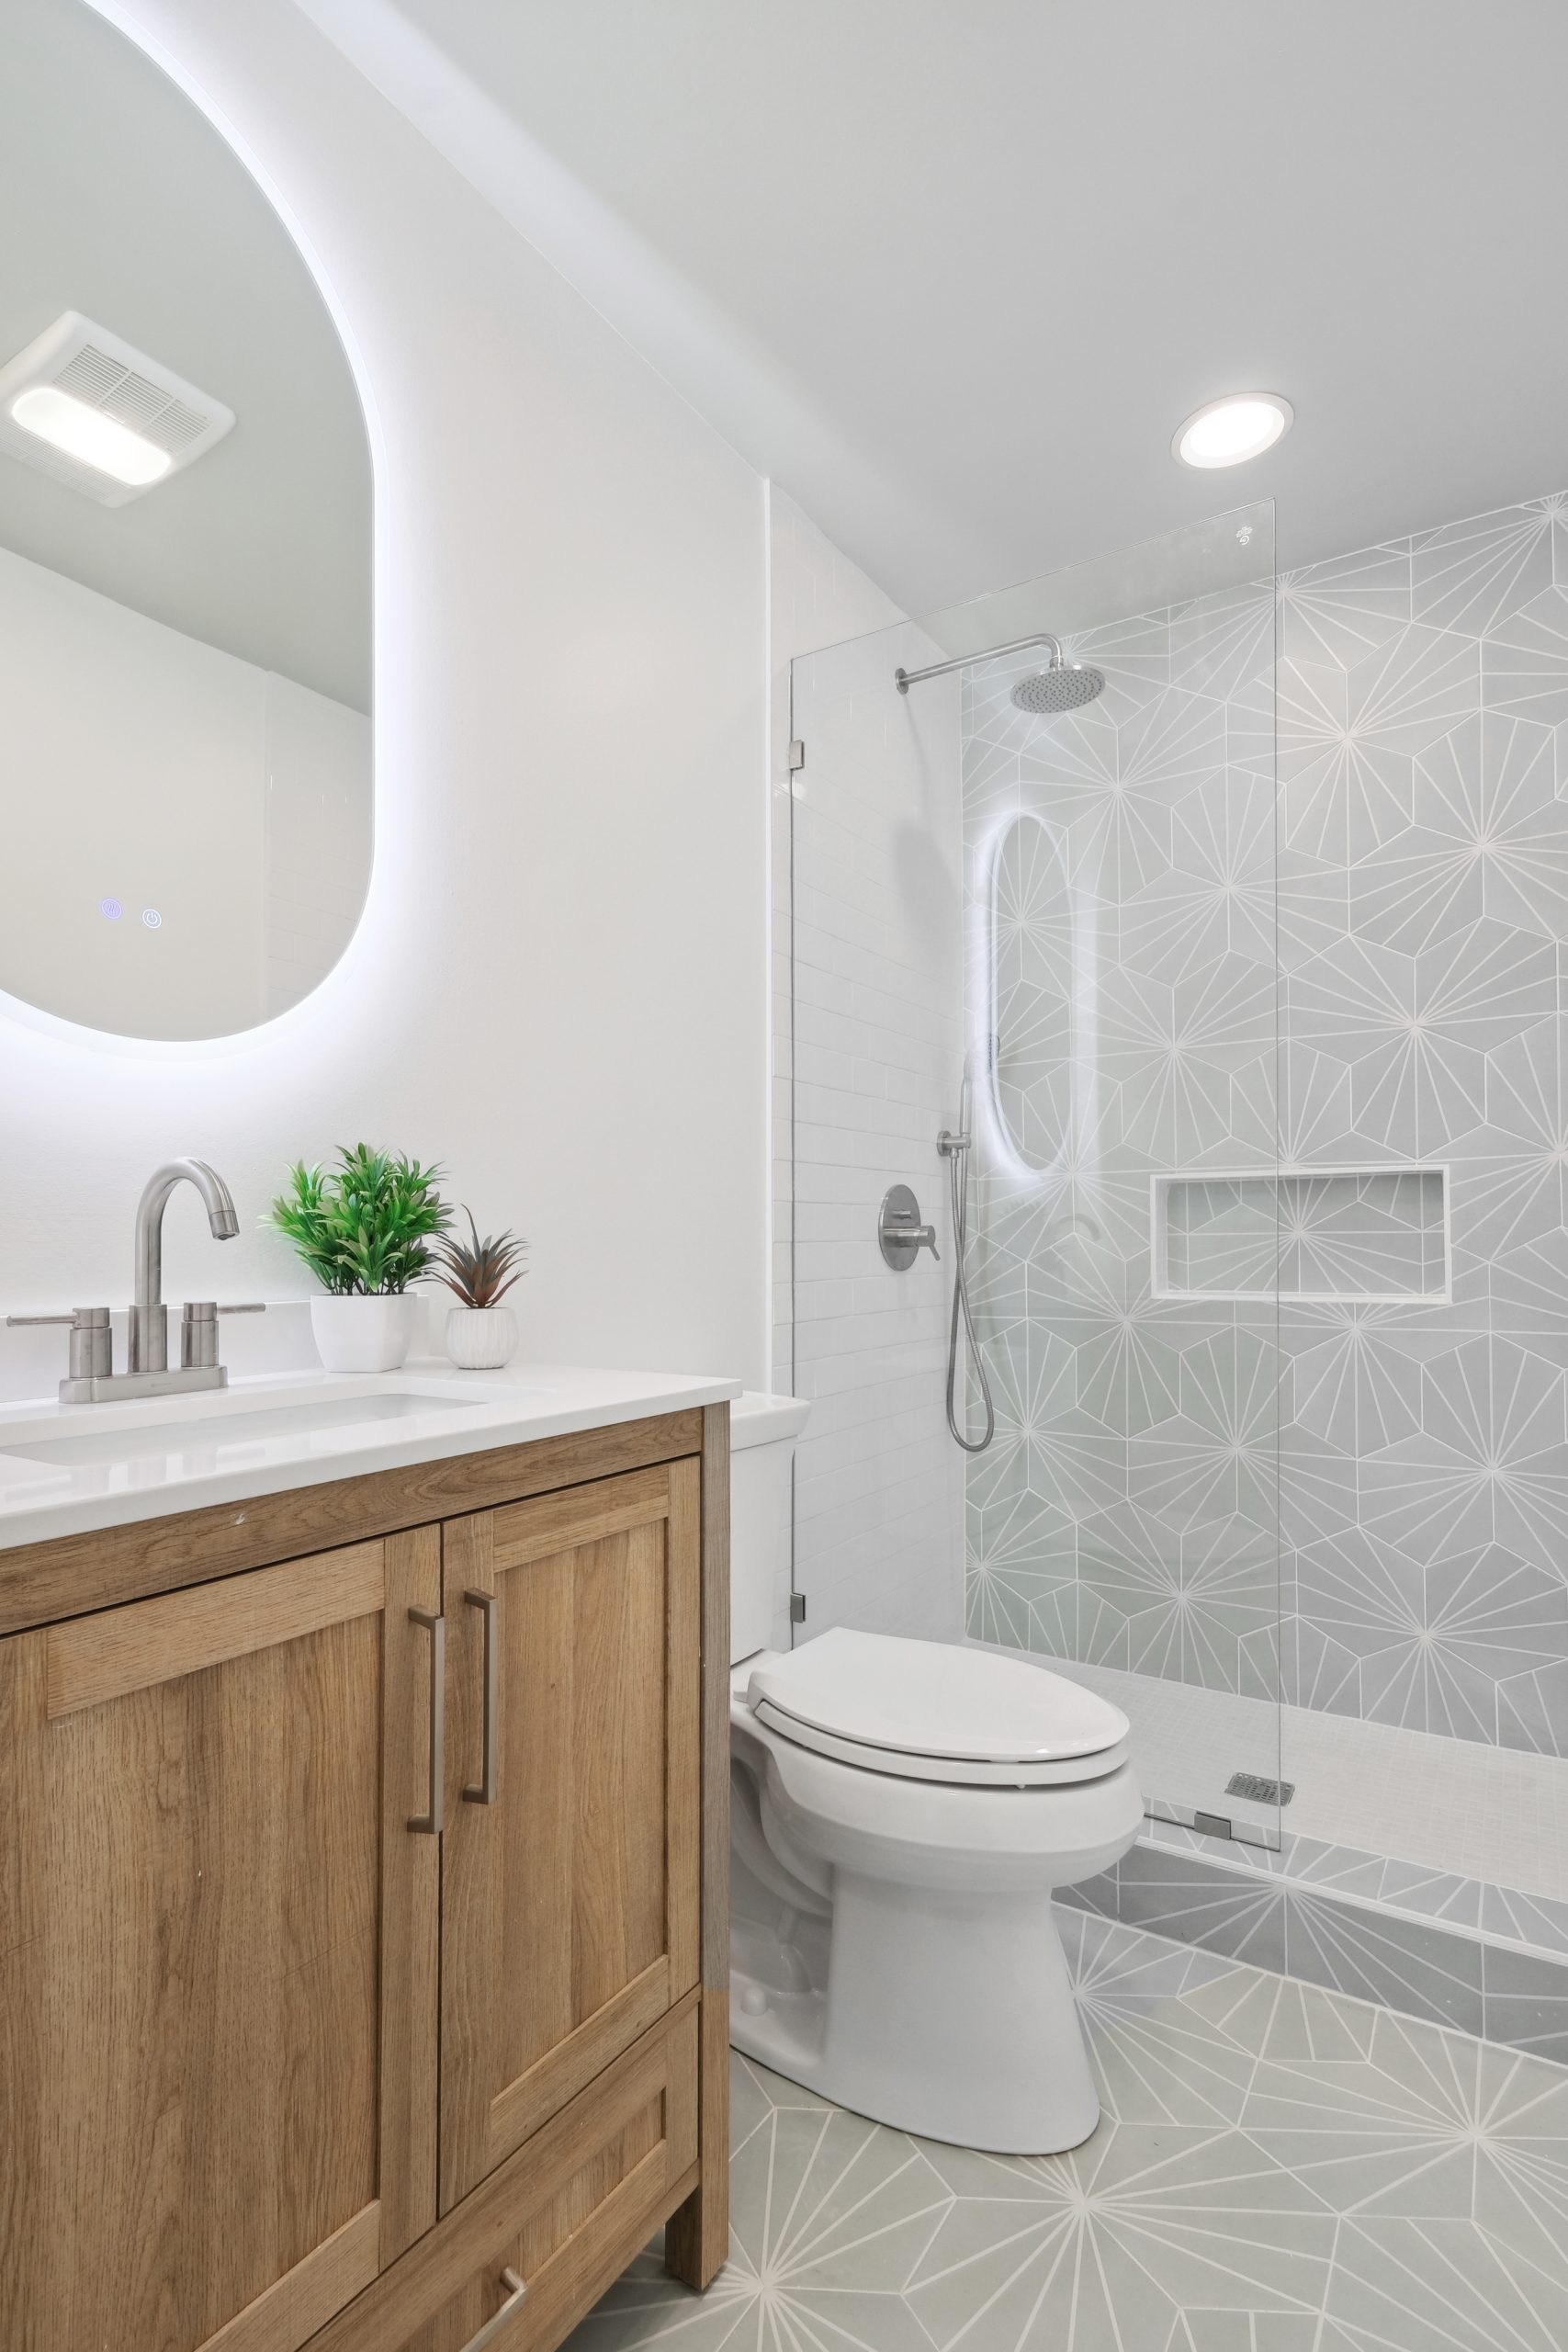 Glenwood House Luxury Bathroom Interior Renovation designed and built by DMG Design+Build